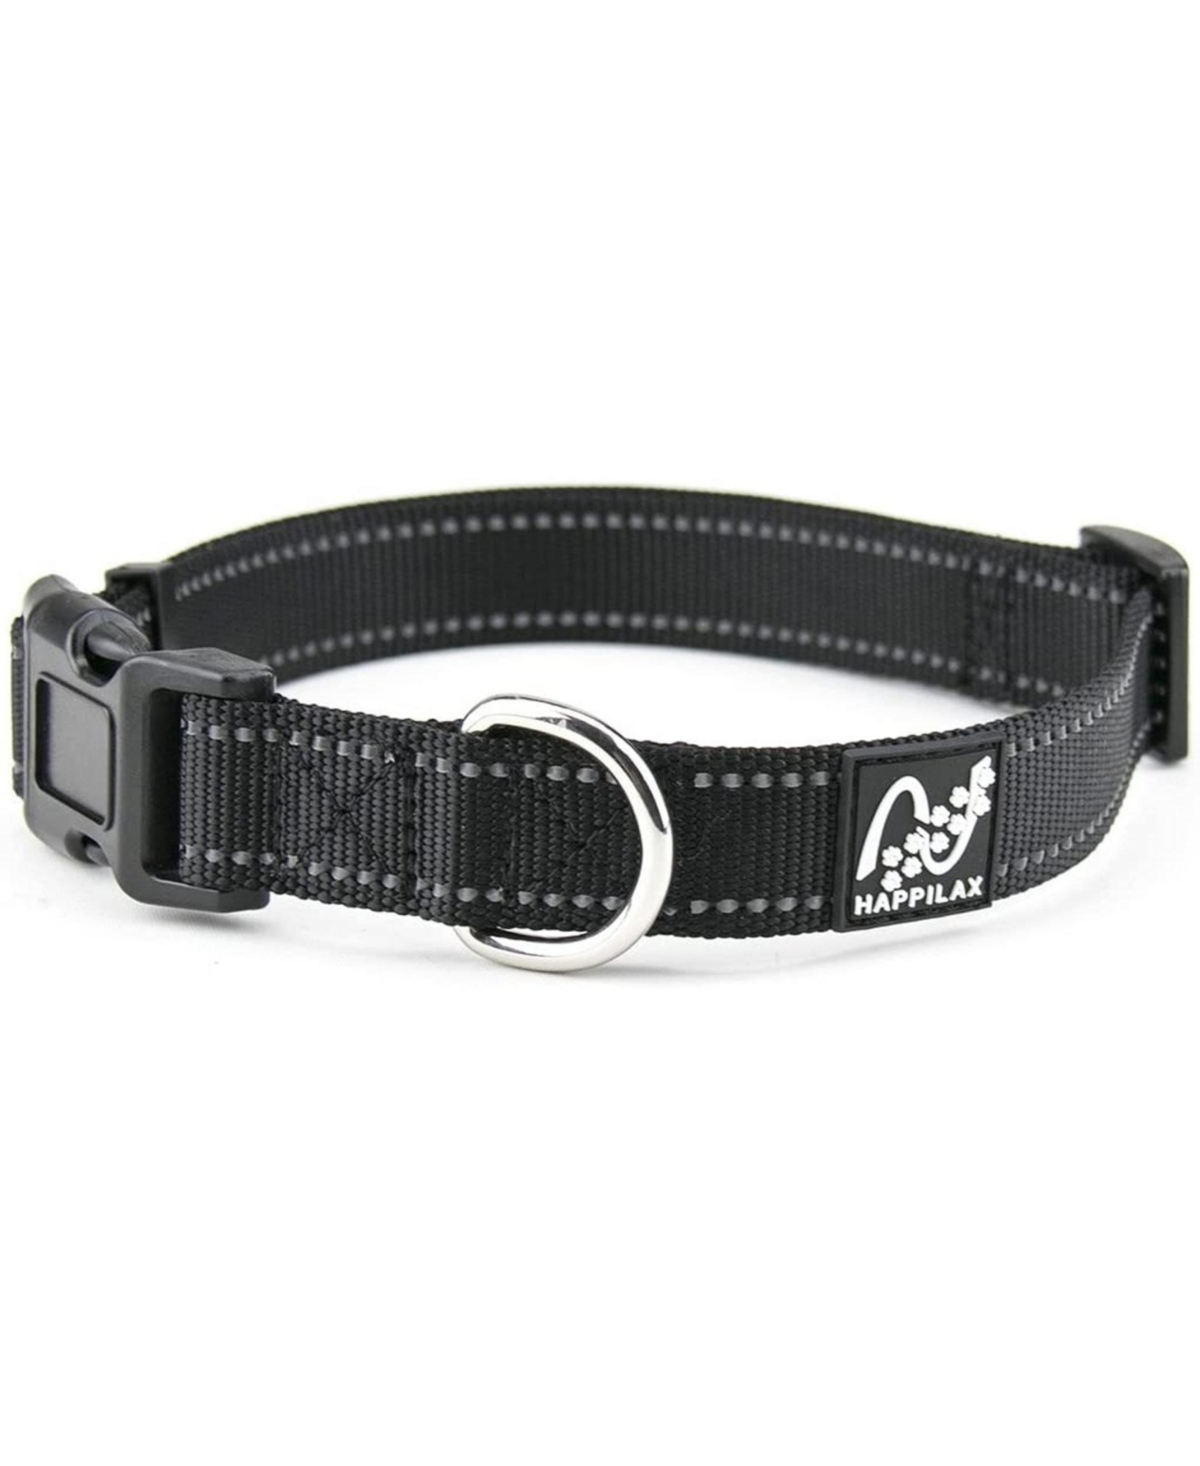 Adjustable and Reflective Nylon Dog Collar for Dogs - Black